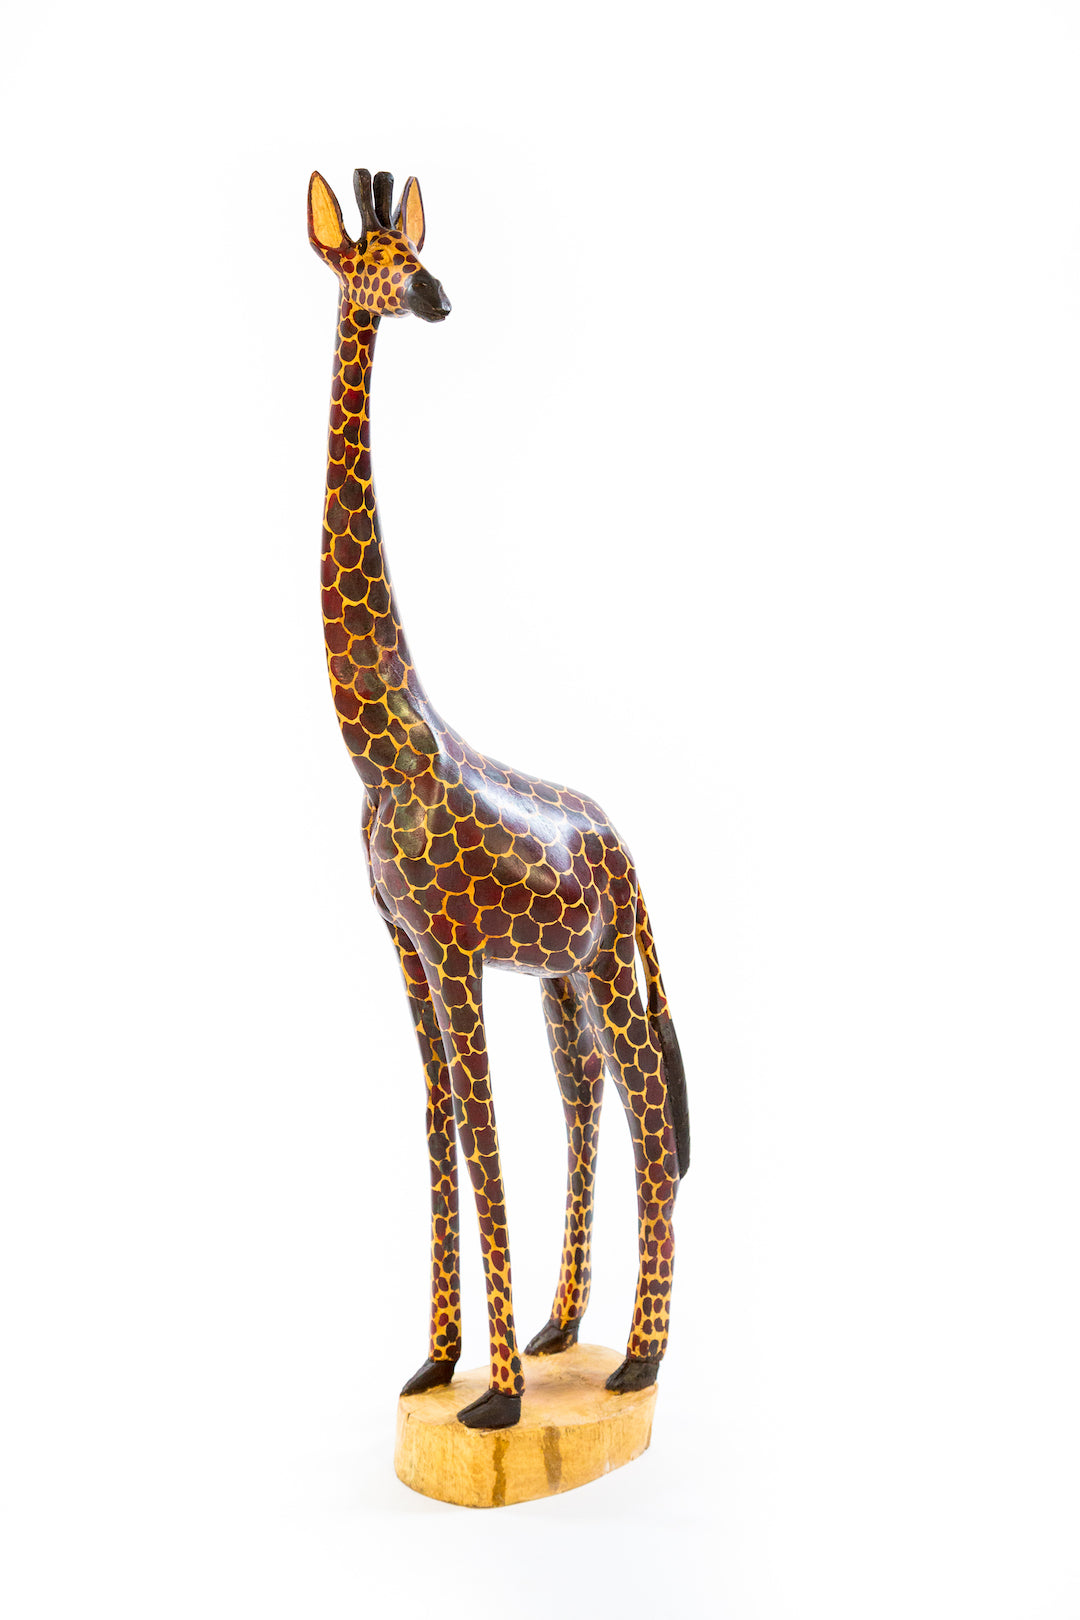 Statuesque Wooden Jacaranda Giraffe Sculptures from Kenya Medium Jacaranda Gifaffe